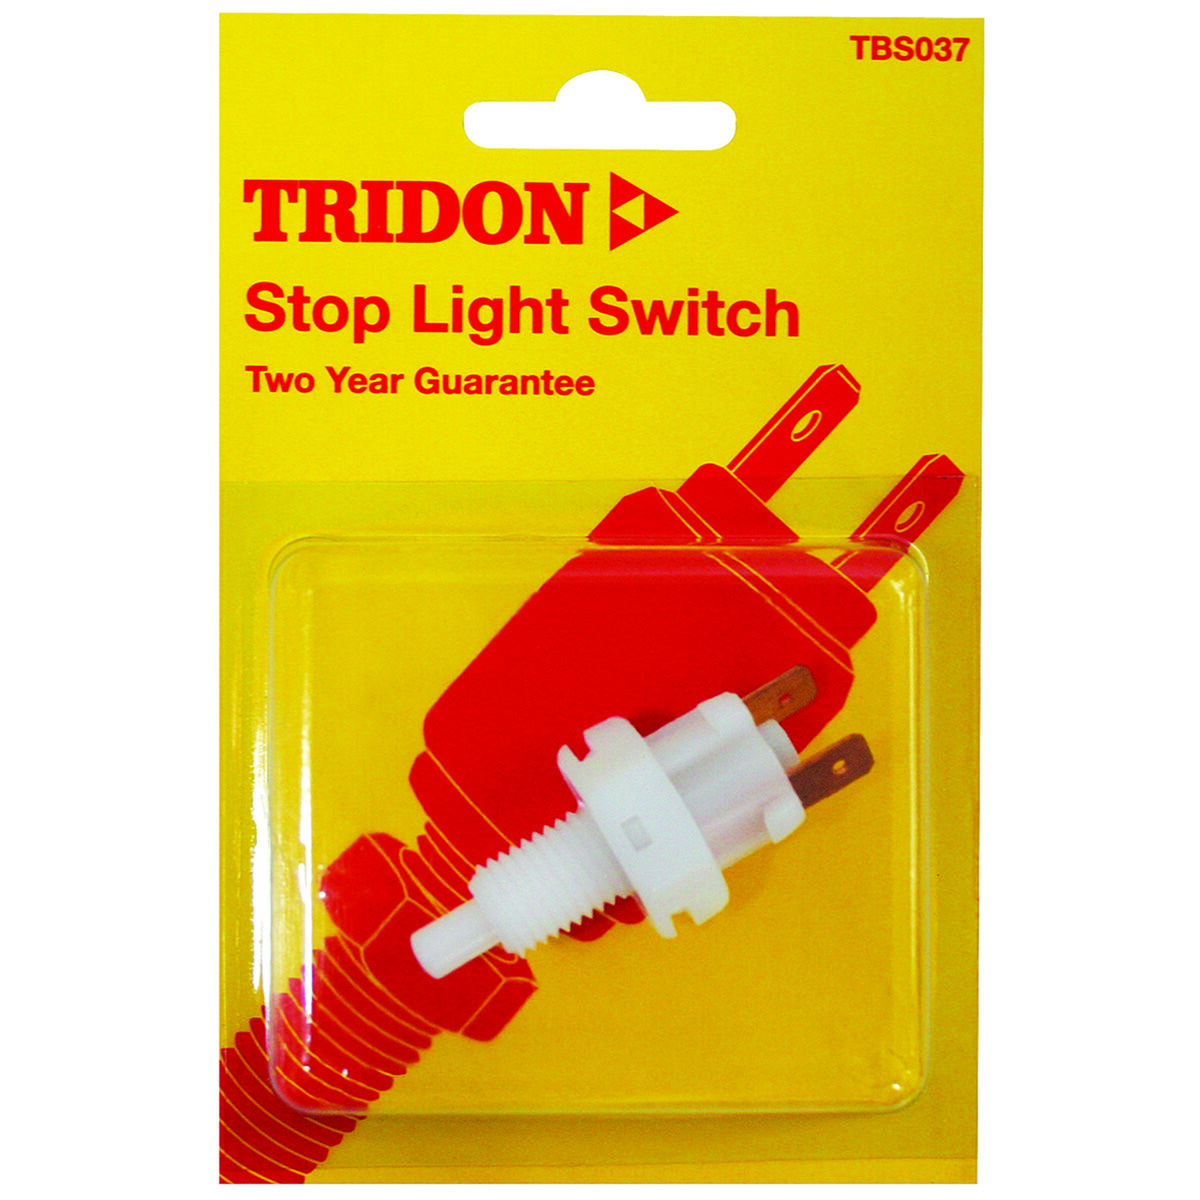 Tridon Stop Light Switch - TBS037, , scaau_hi-res